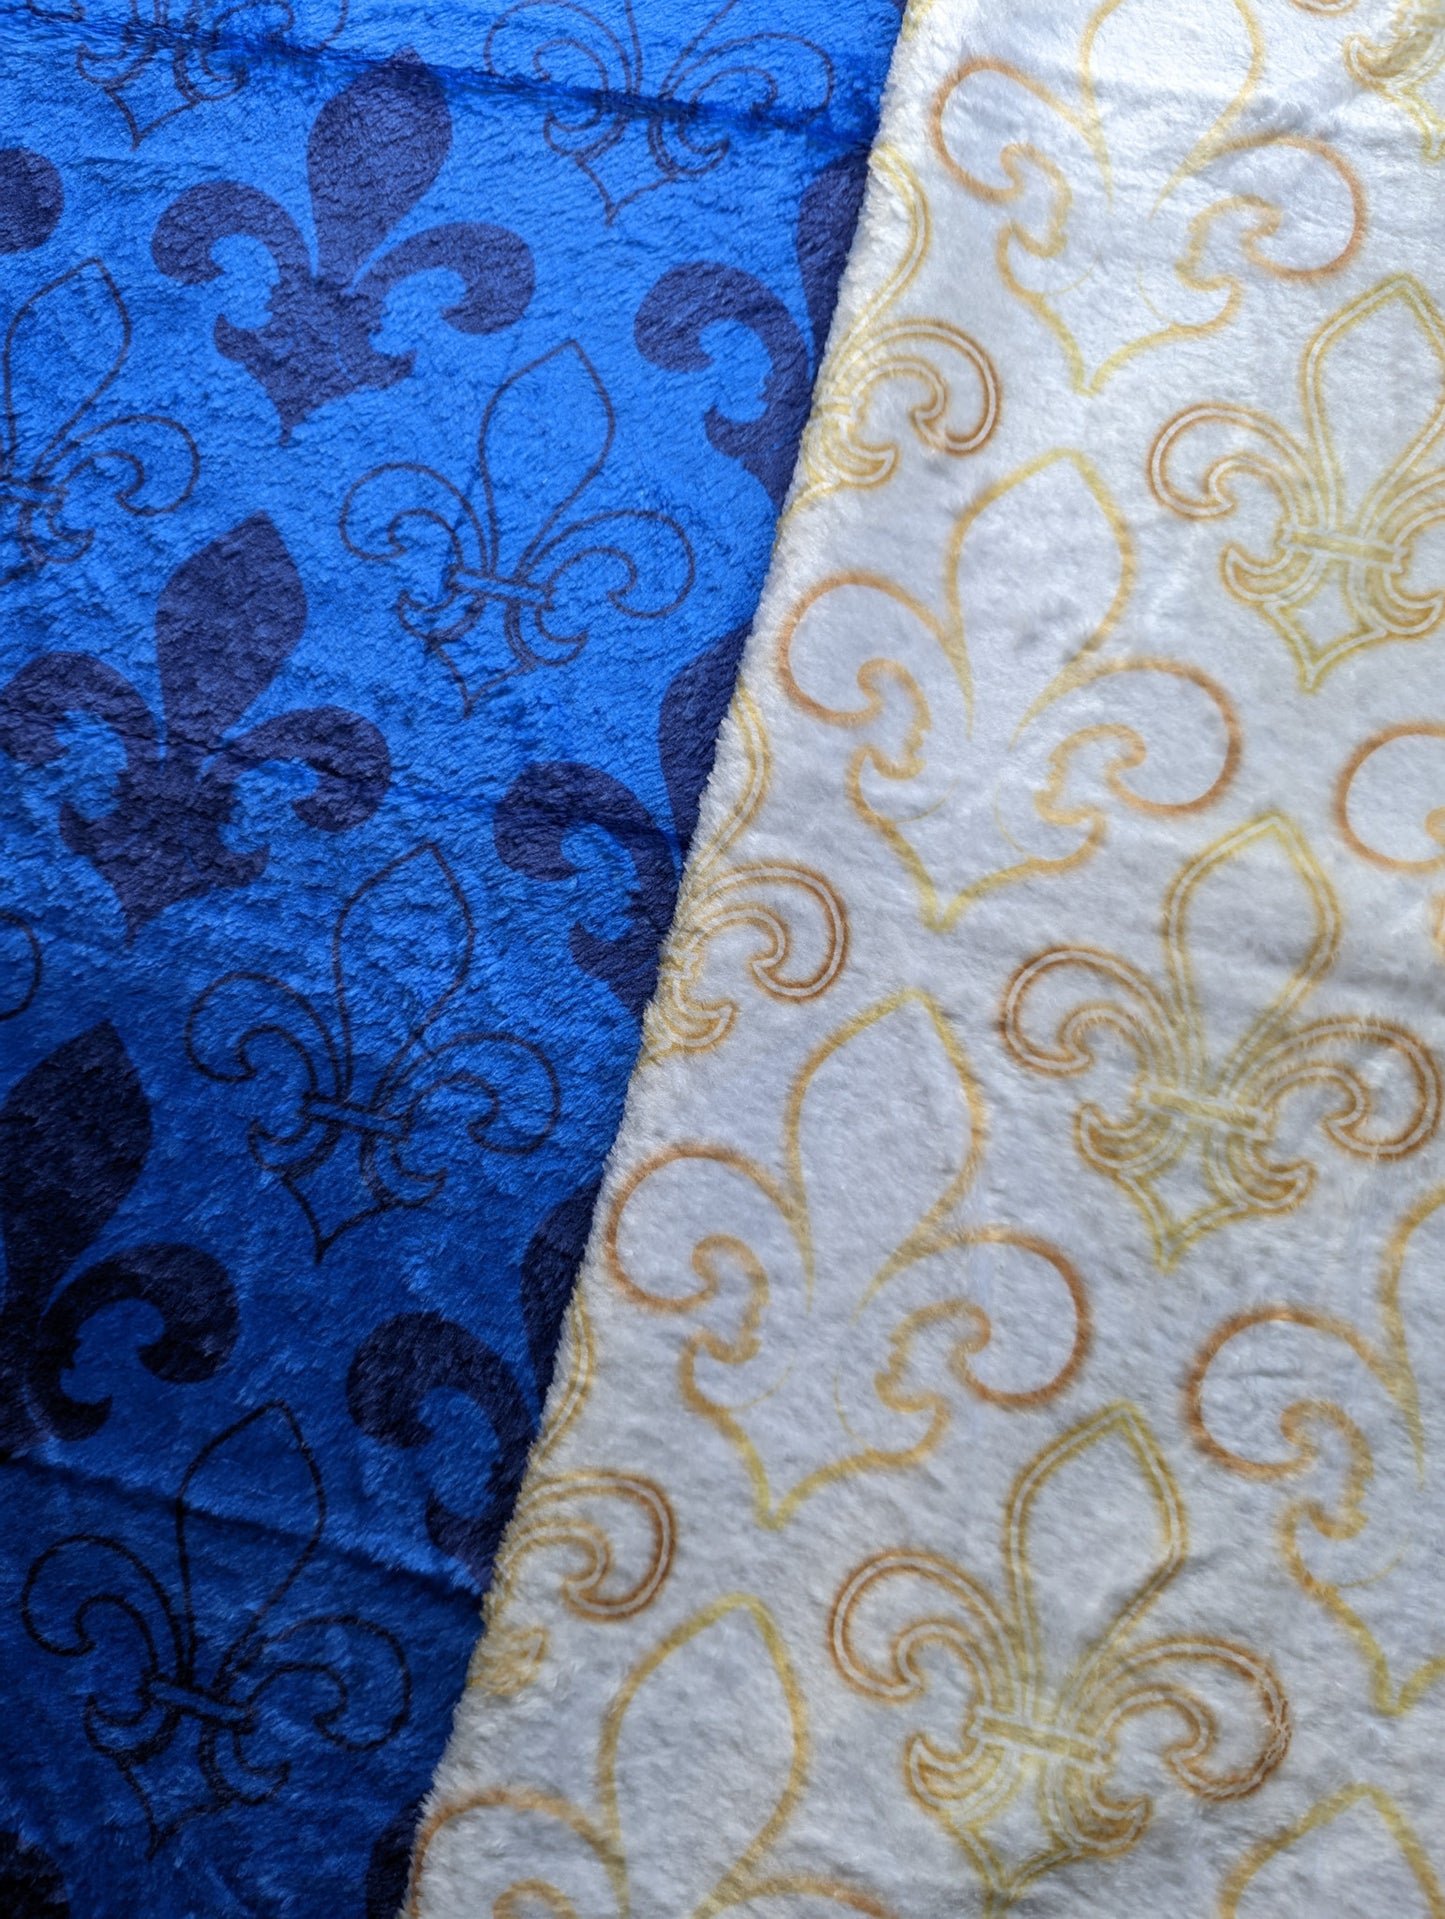 Blue and White Fleur de Lis Altar Cloth and Vestment Blanket